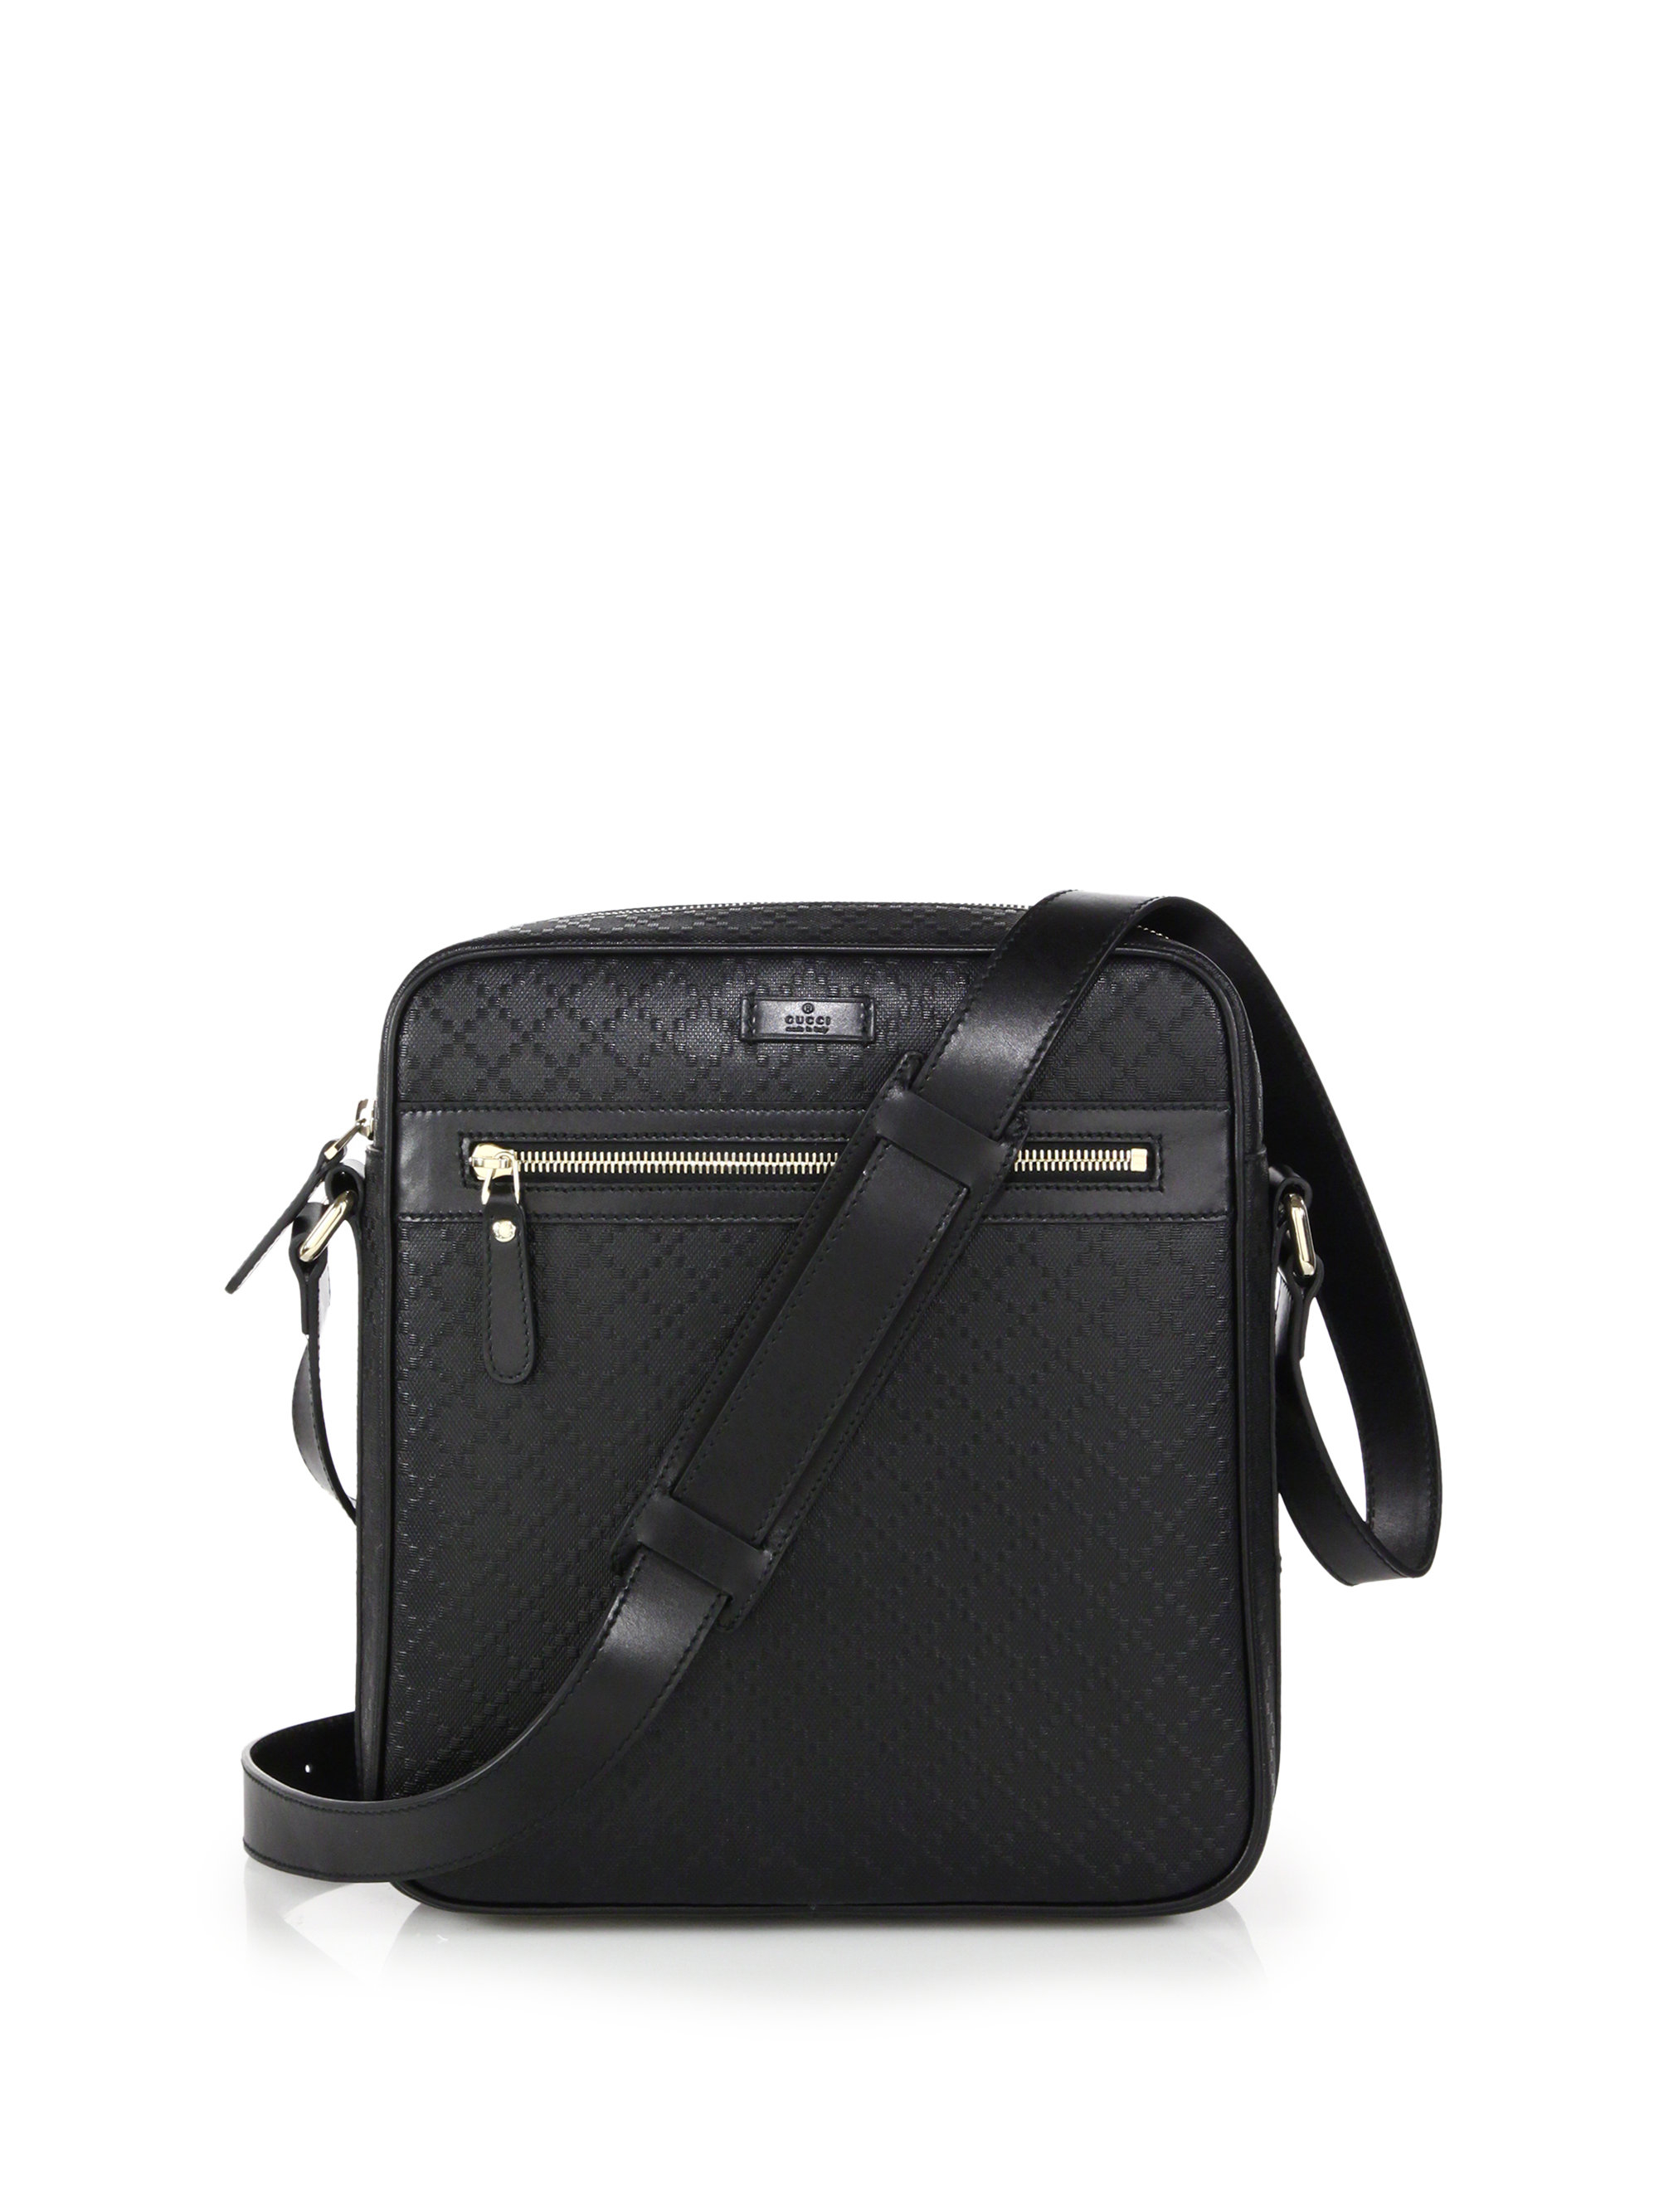 Lyst - Gucci Bright Diamante Leather Shoulder Bag in Black for Men